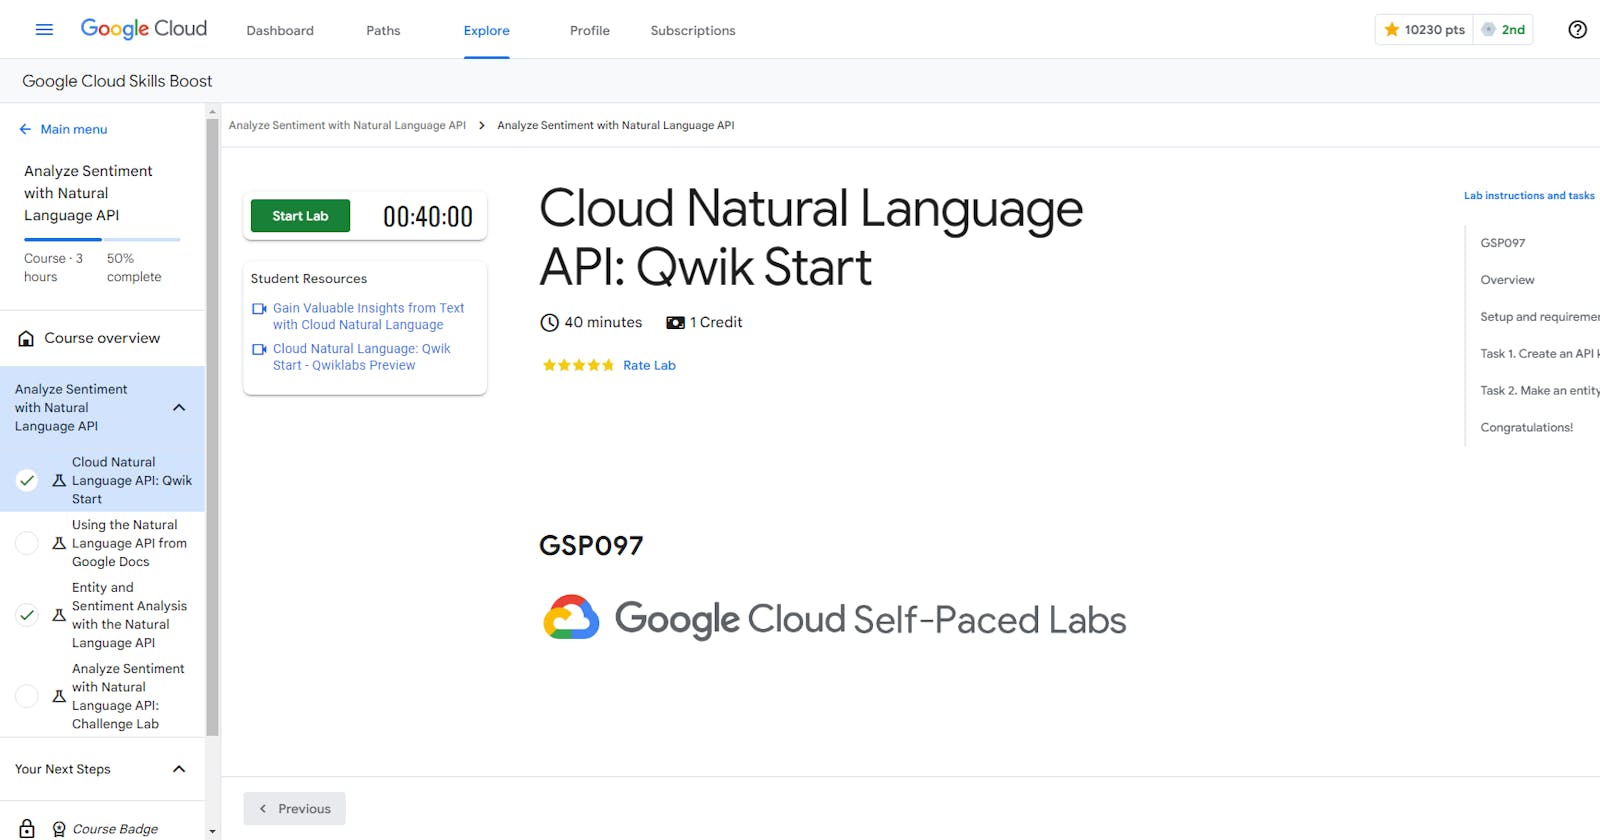 Cloud Natural Language API: Qwik Start - GSP097